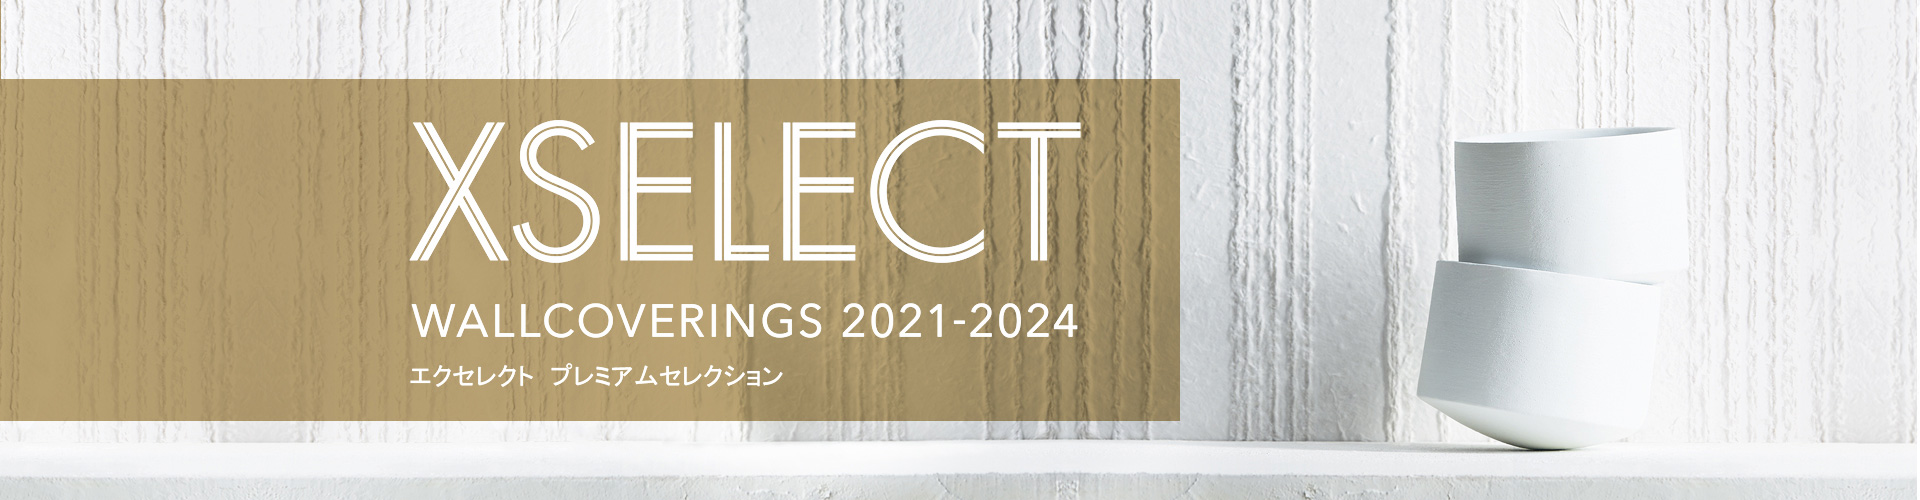 XSELECT WALLCOVERINGS 2021-2024 エクセレクト プレミアムセレクション